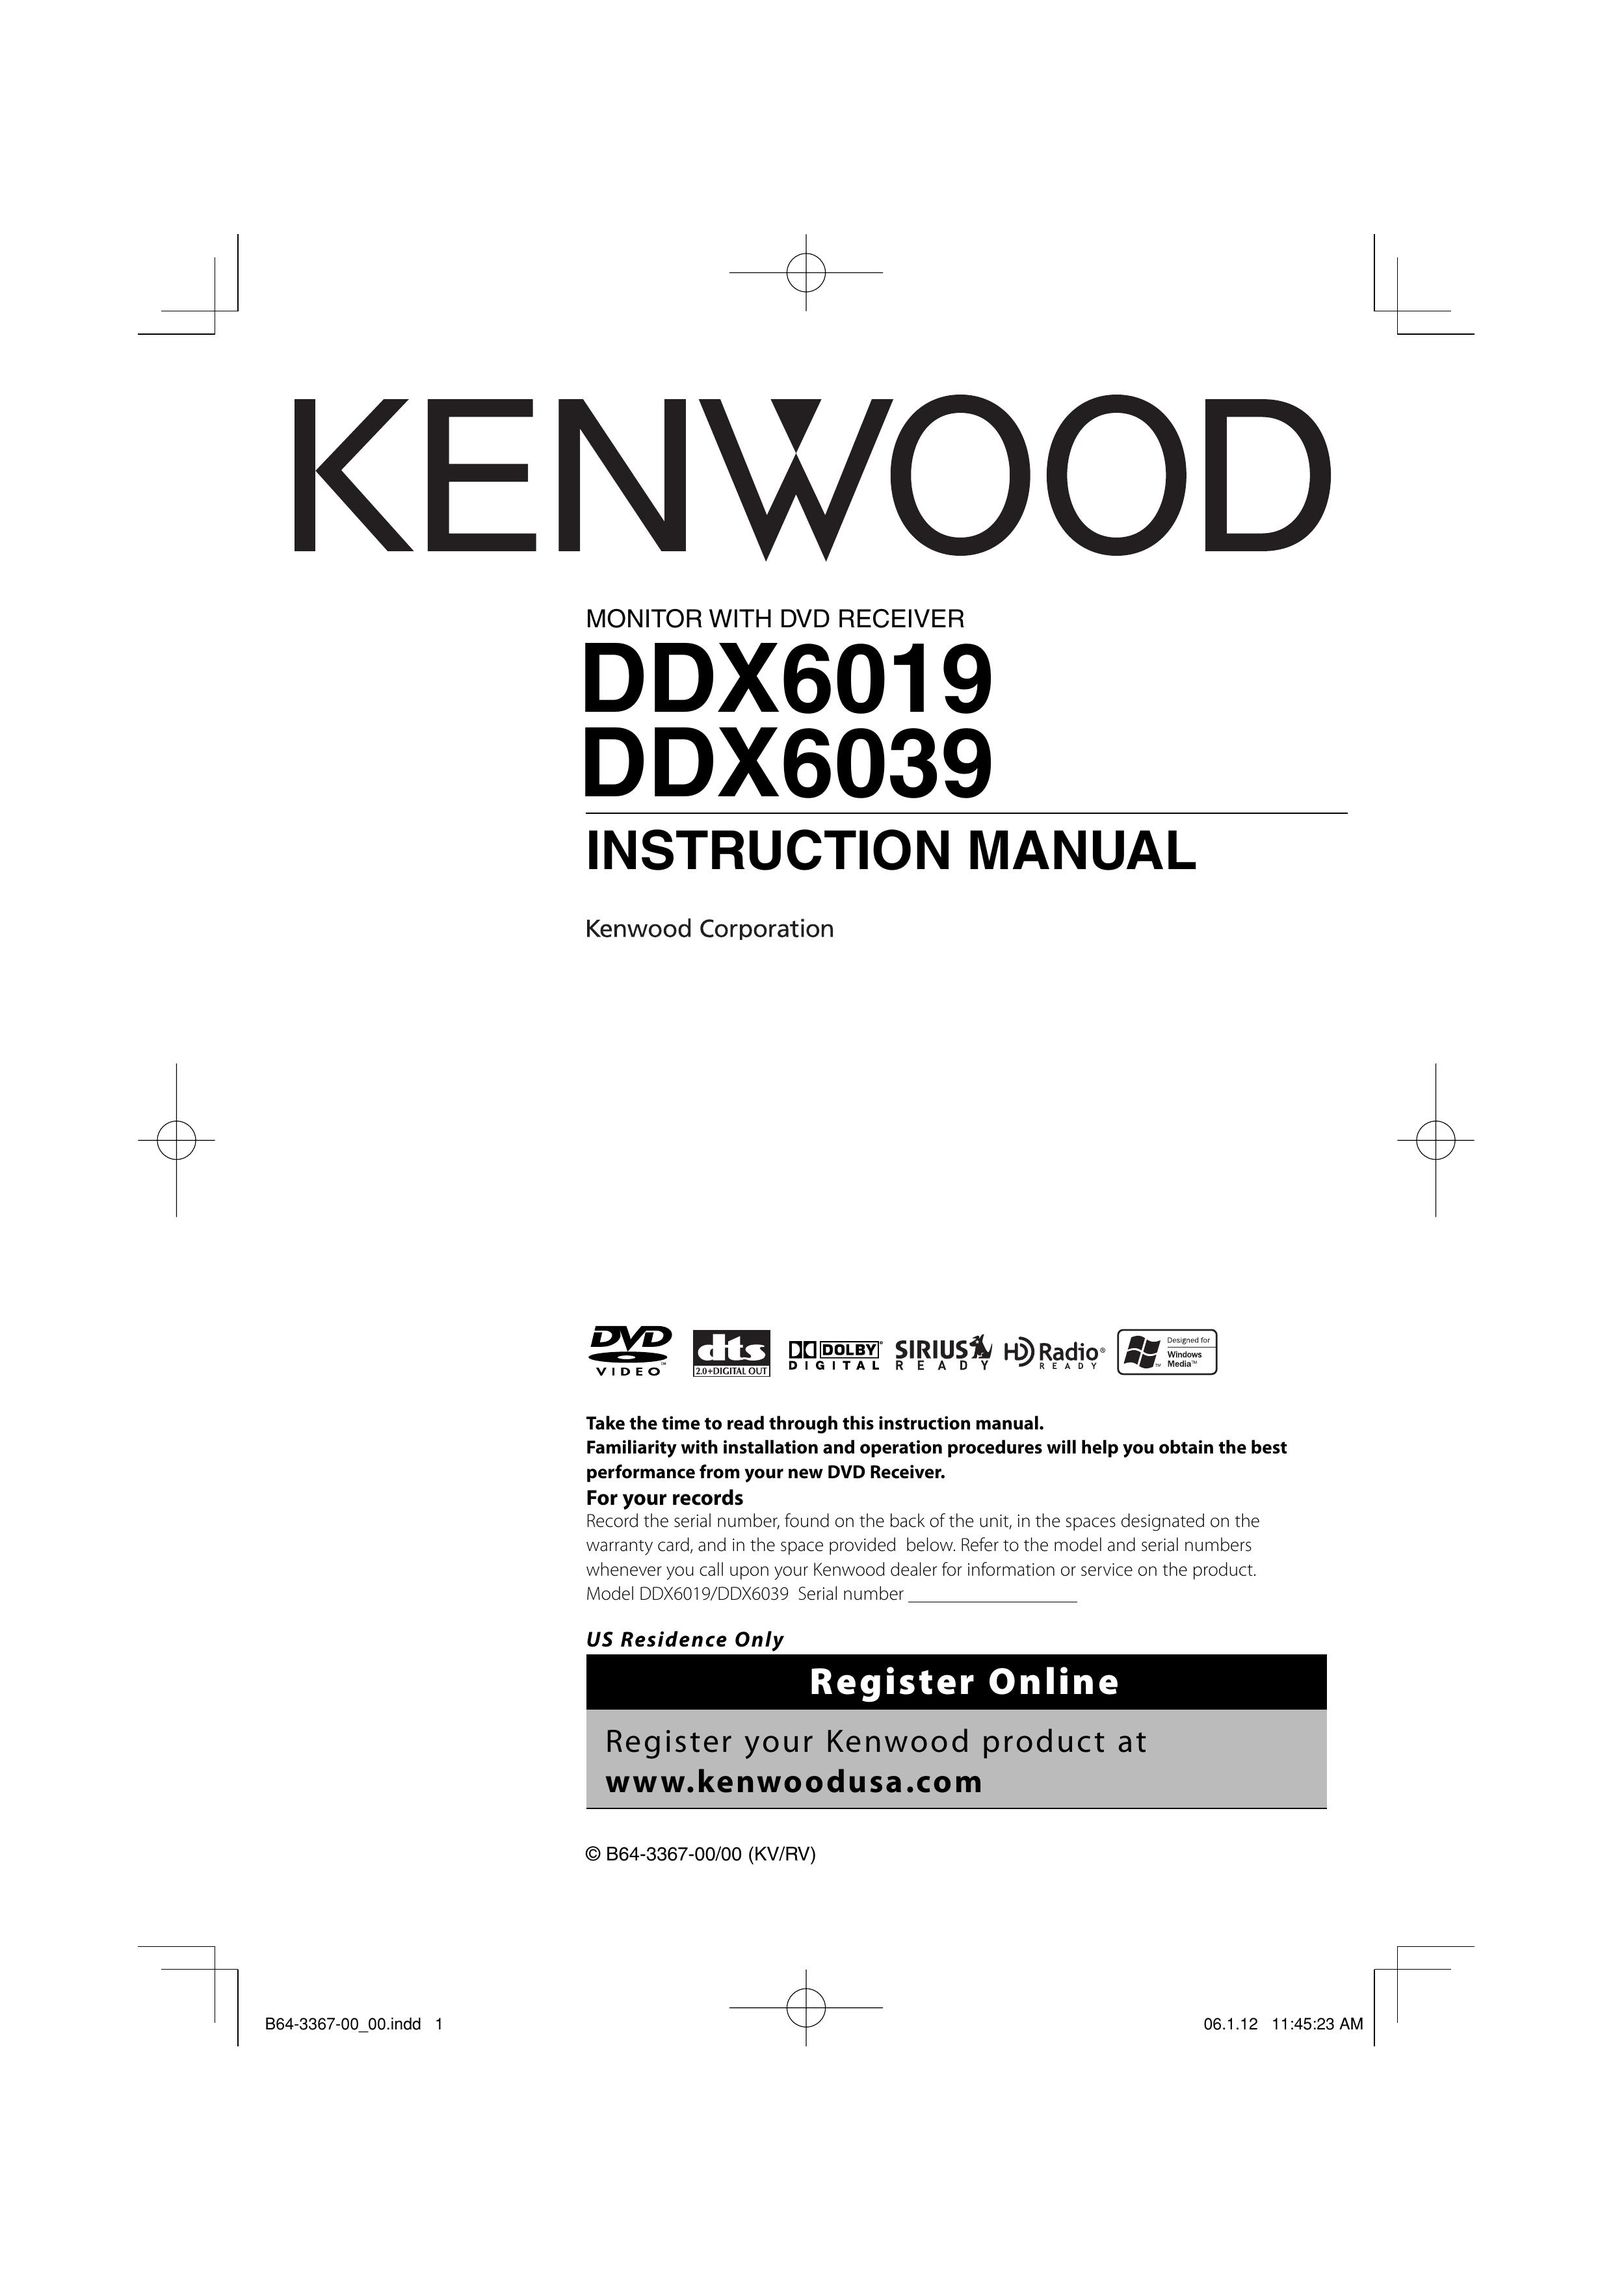 Kenwood DDX6019 Portable DVD Player User Manual